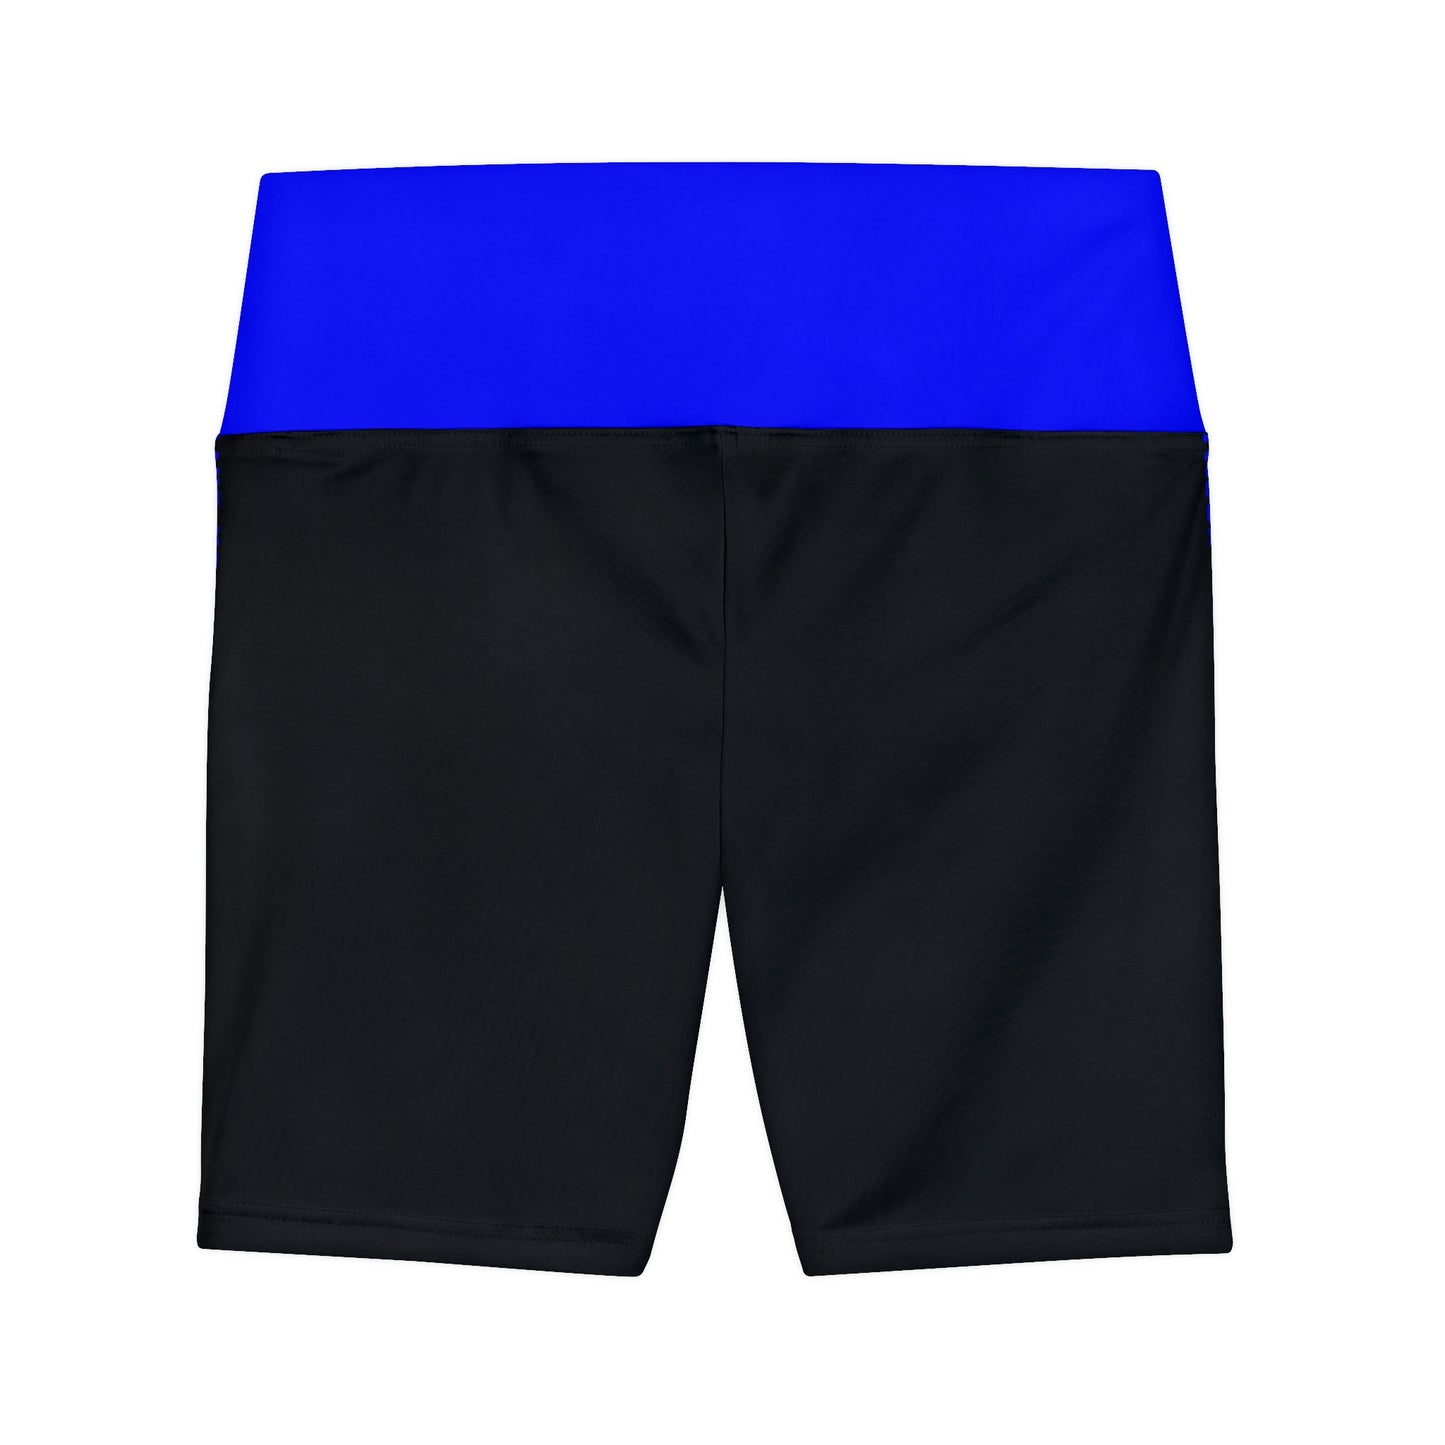 Battle Box Blue/Black Women's Workout Shorts-T1